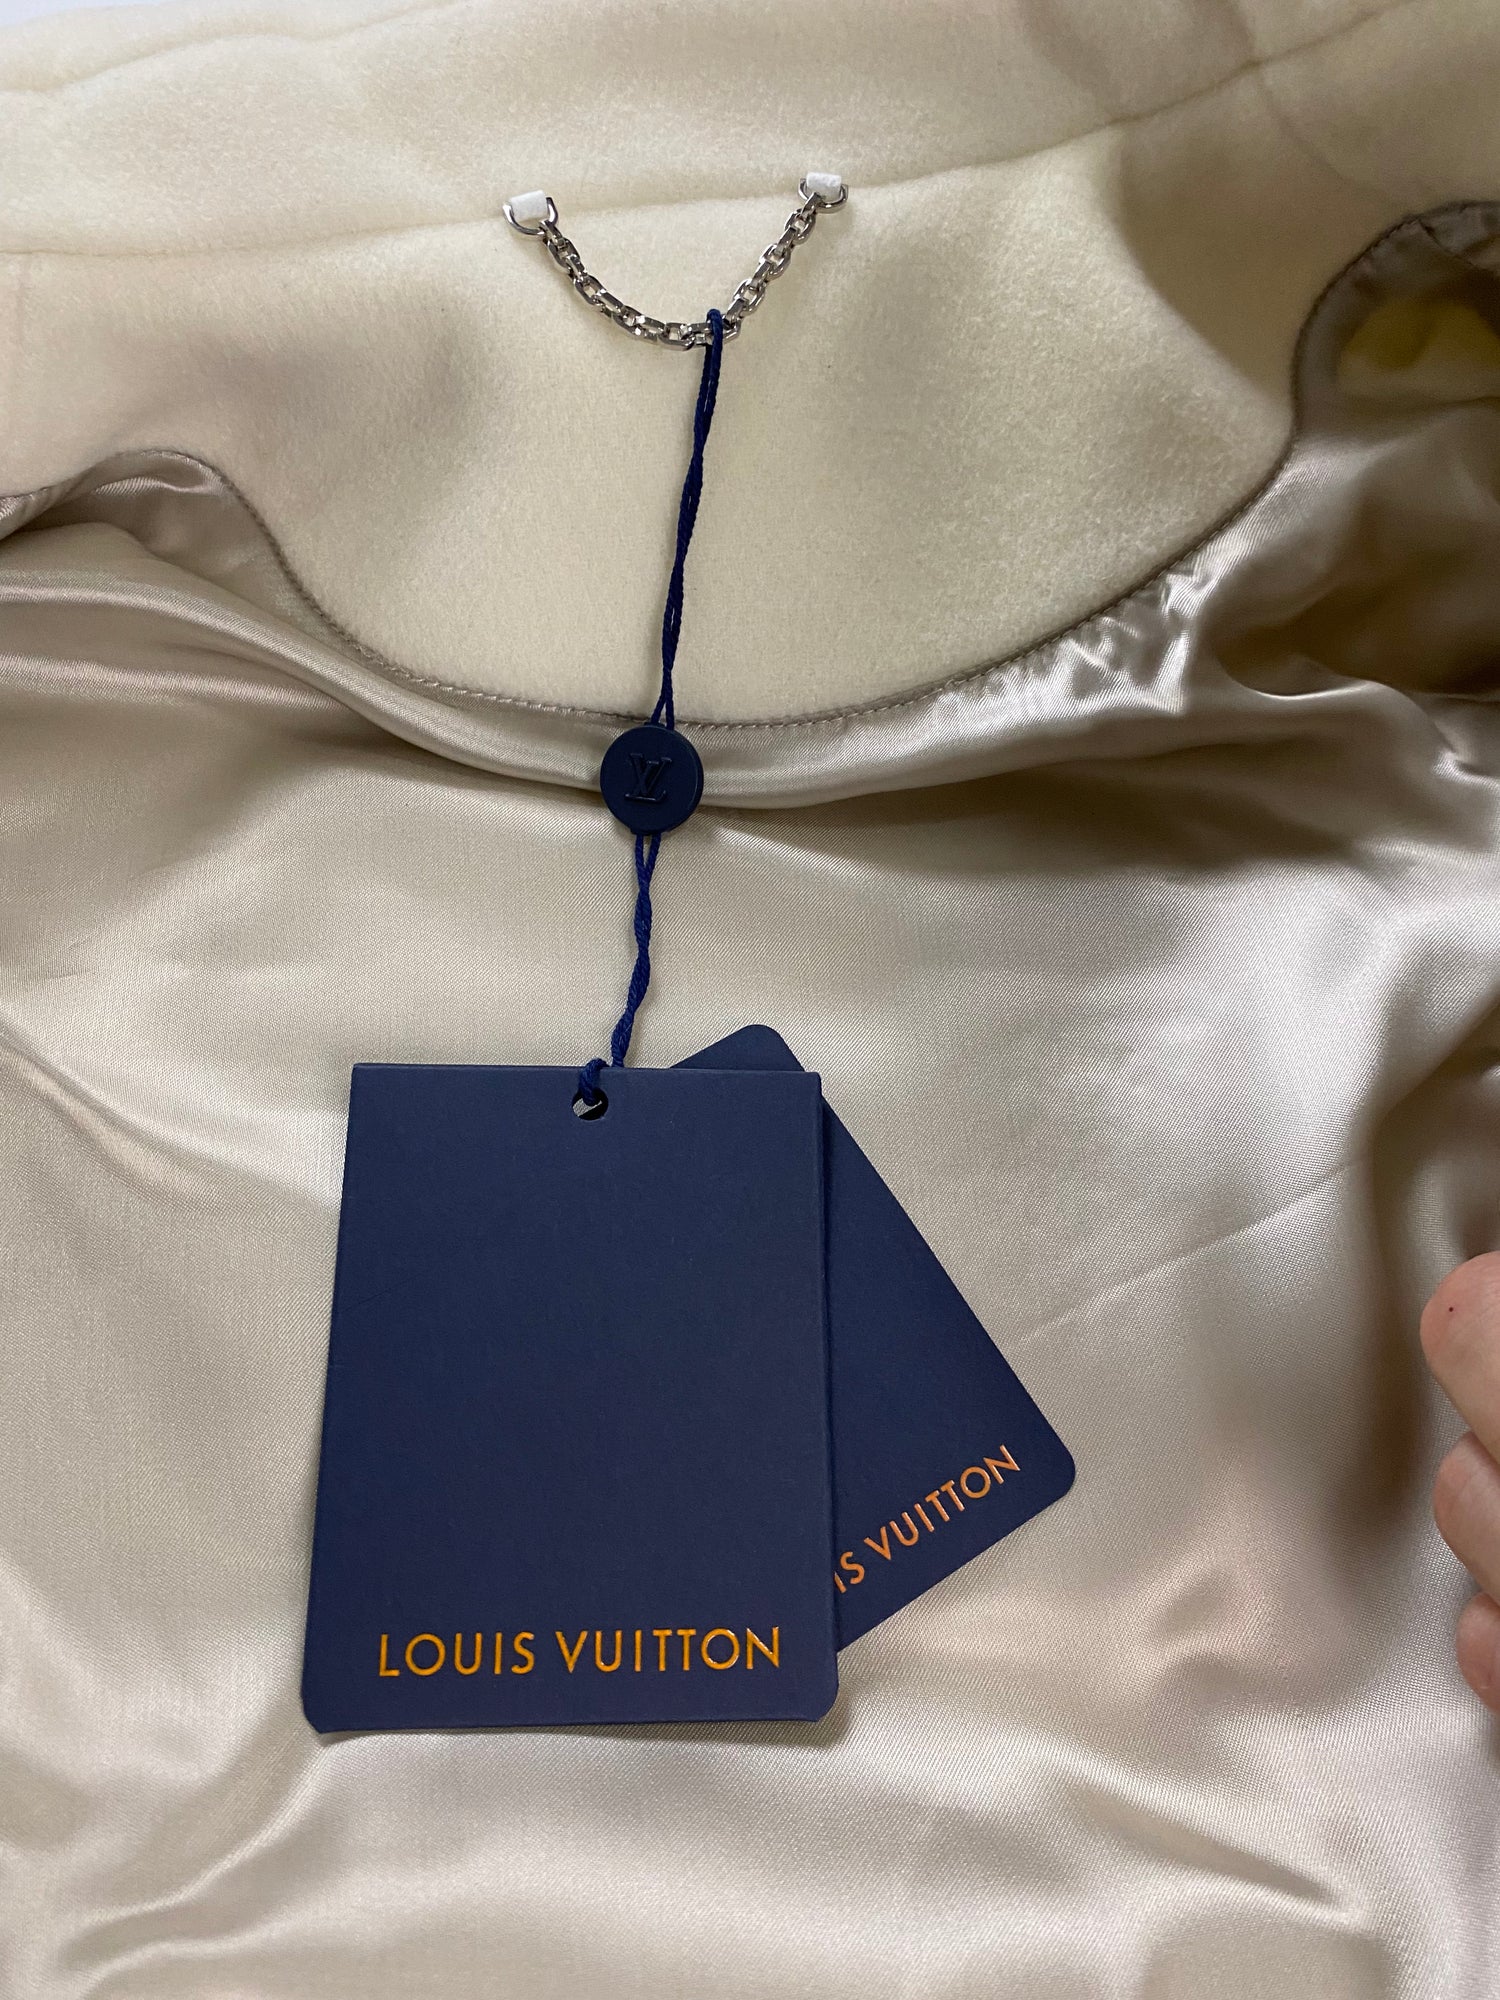 Fashion Drops on X: Louis Vuitton Fall/Winter 2022 Creme Bunny Varsity  Jacket by Virgil Abloh  / X